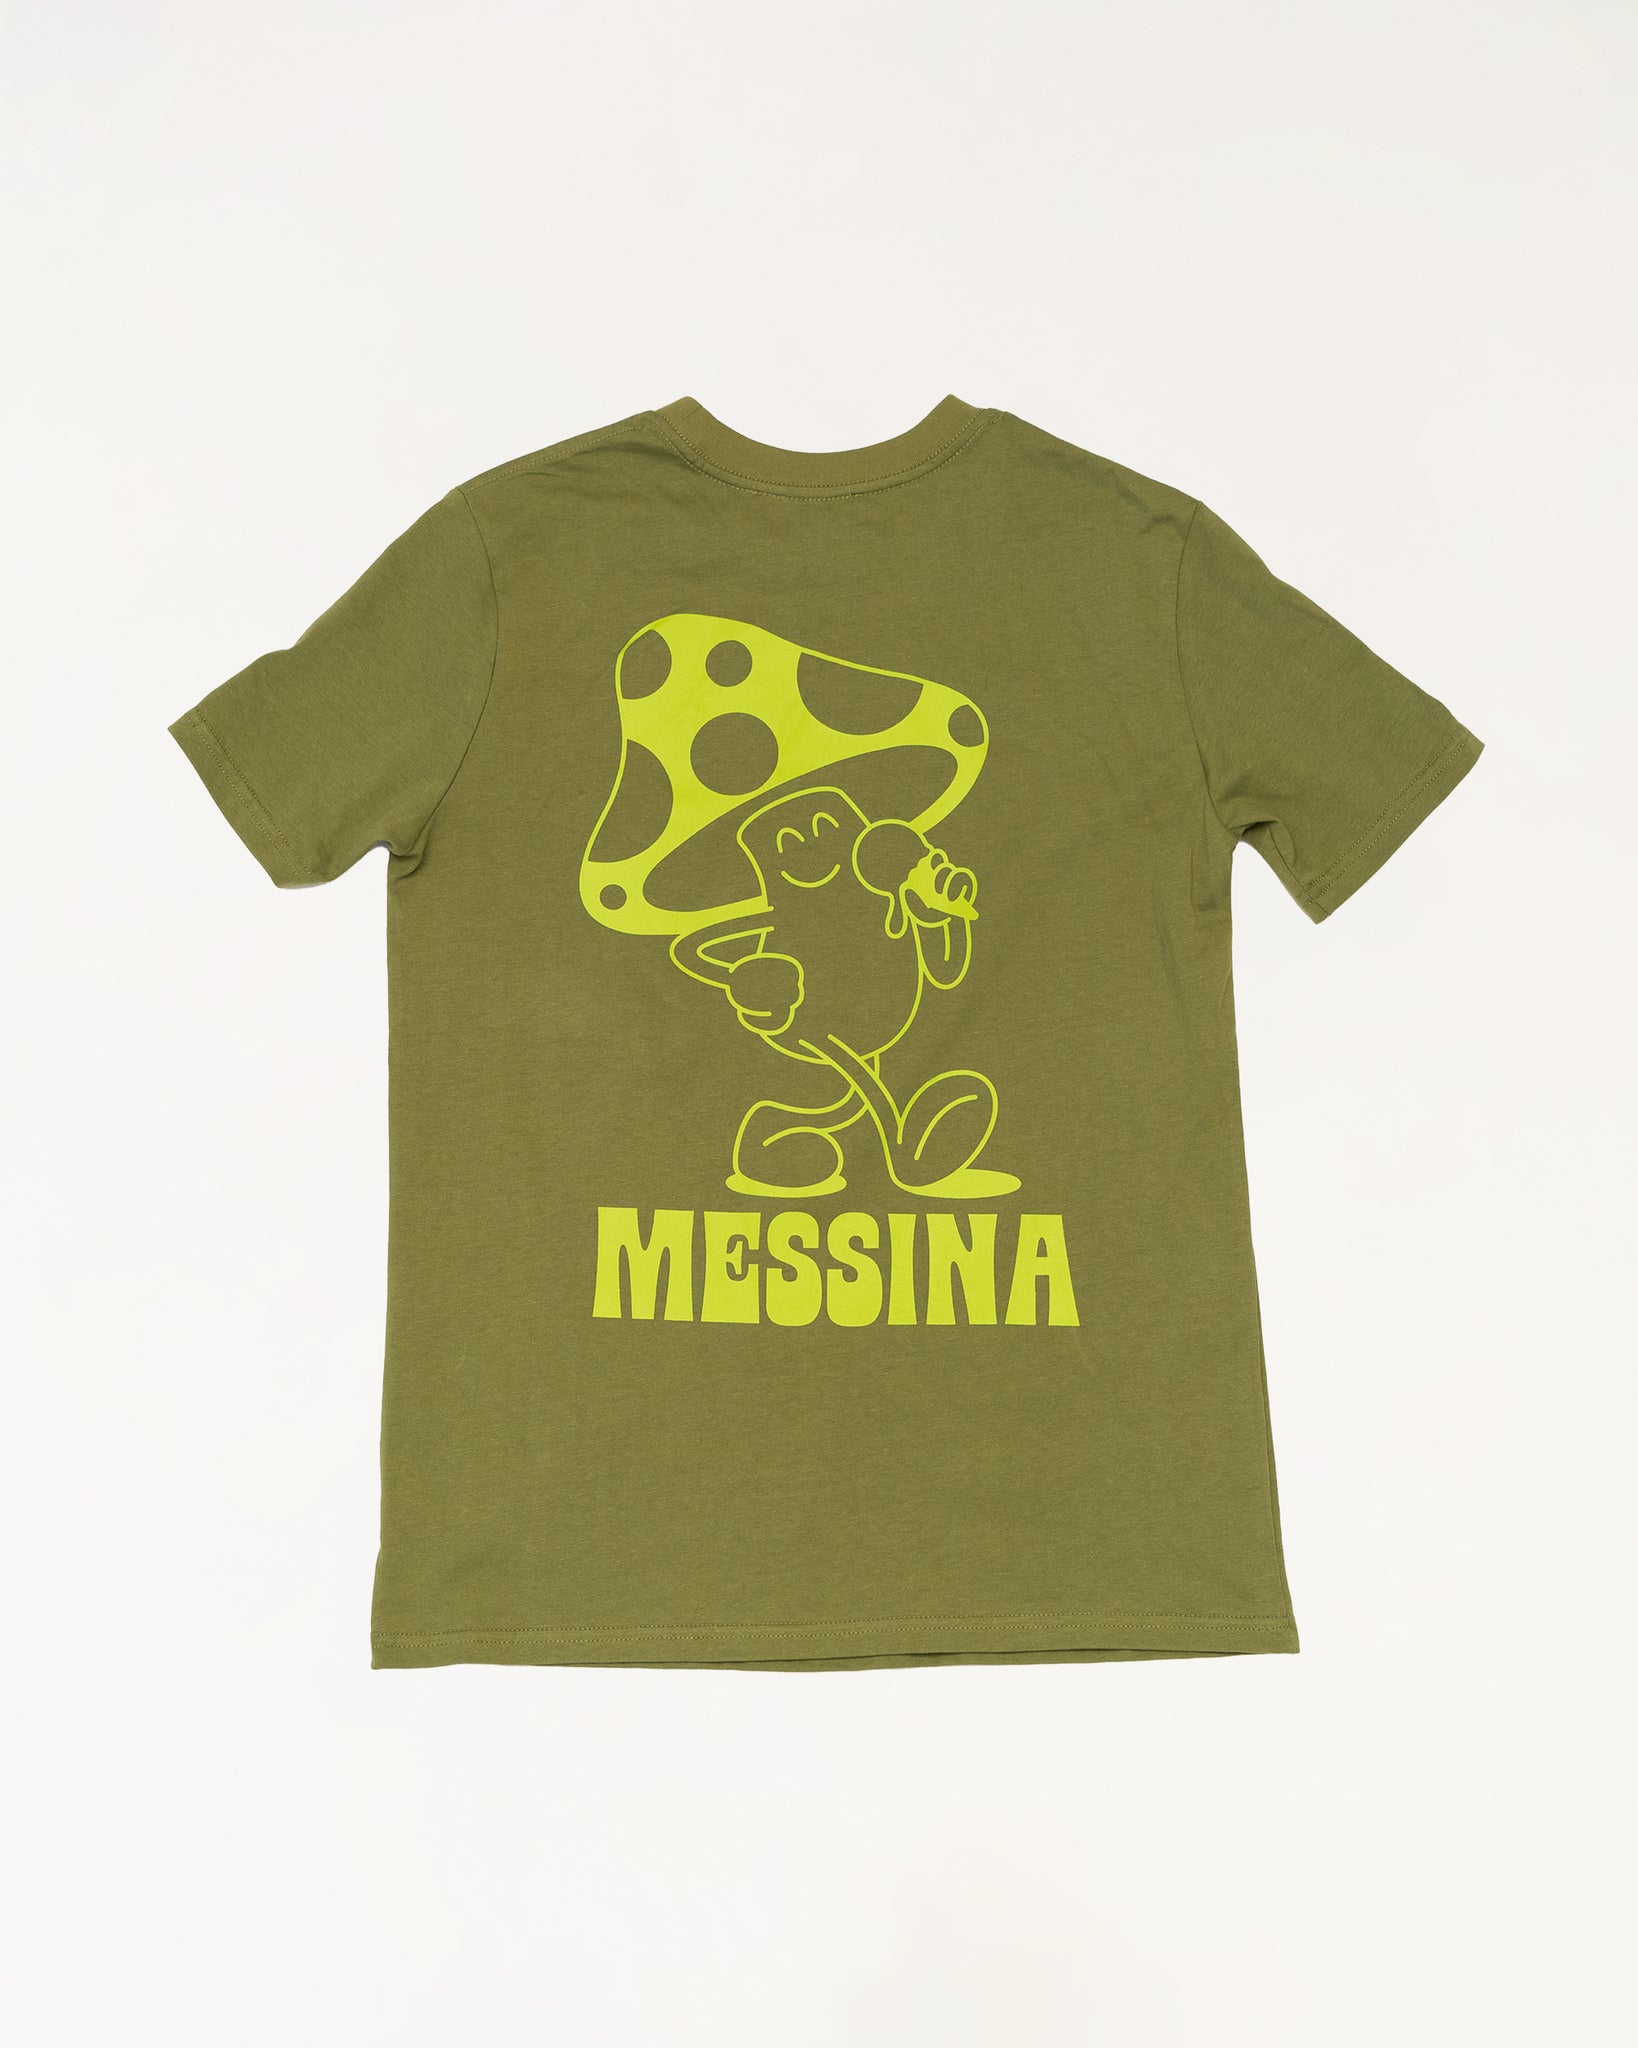 Messina T-Shirt